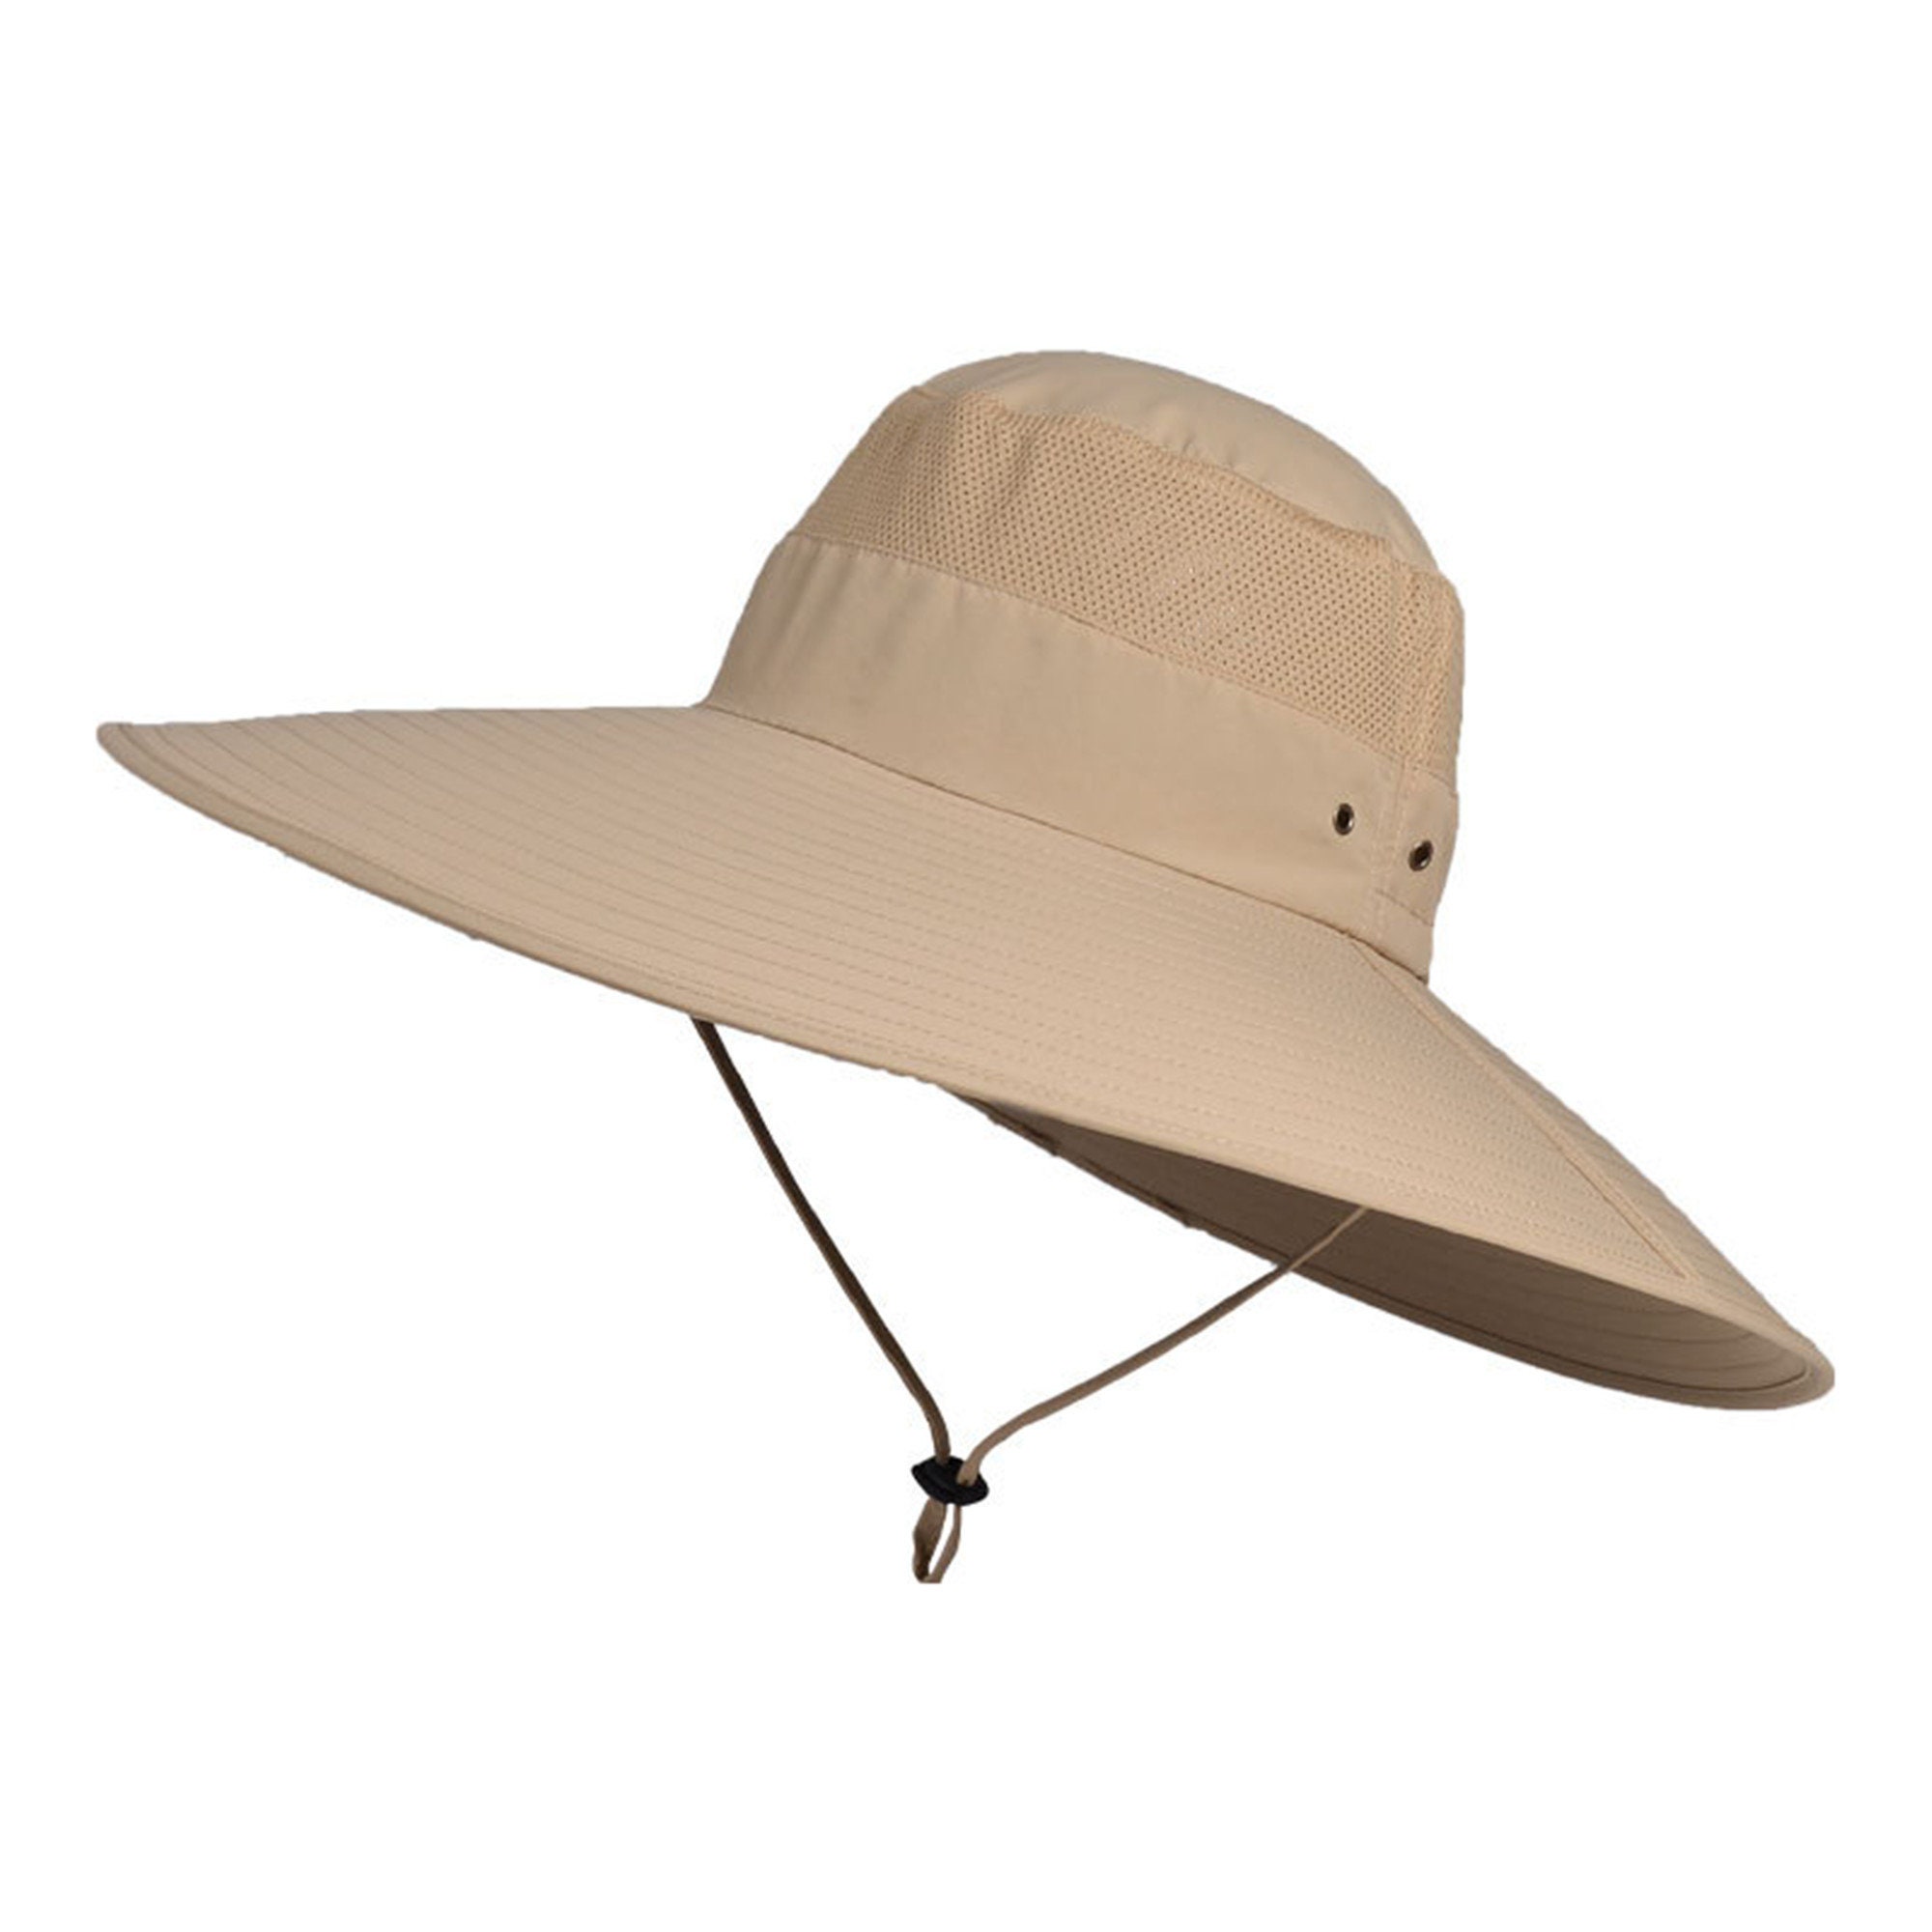 Sun Visor hat with Large Brim Sun Visor Fishing hat Men's Outdoor